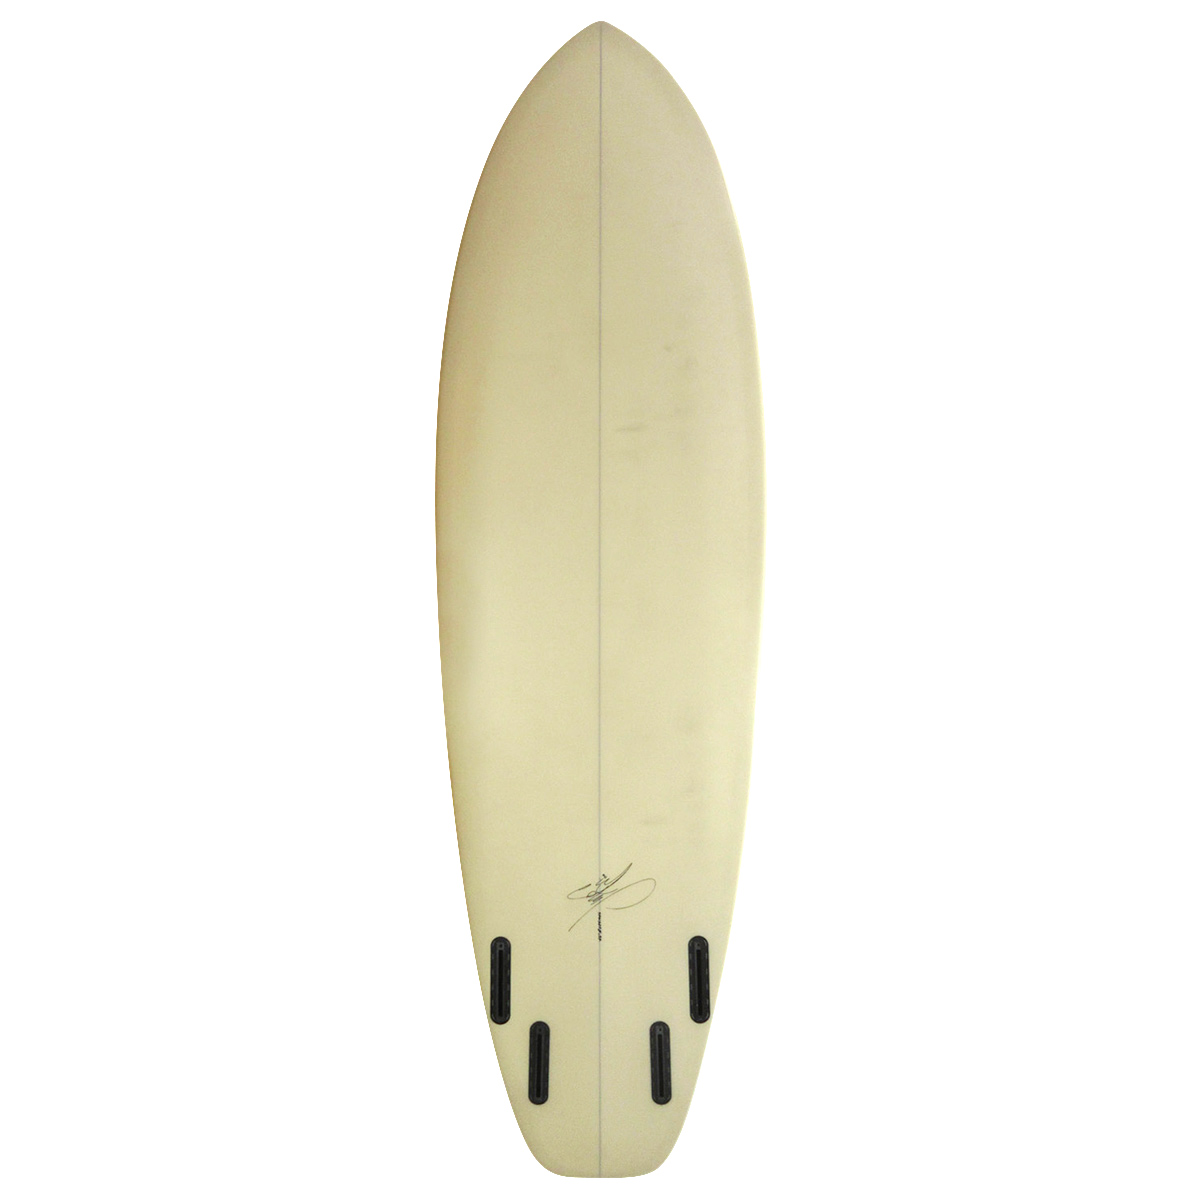 Mccallum Surfboards / Gypsy 6'4 Shaped By Jeff Mccallum